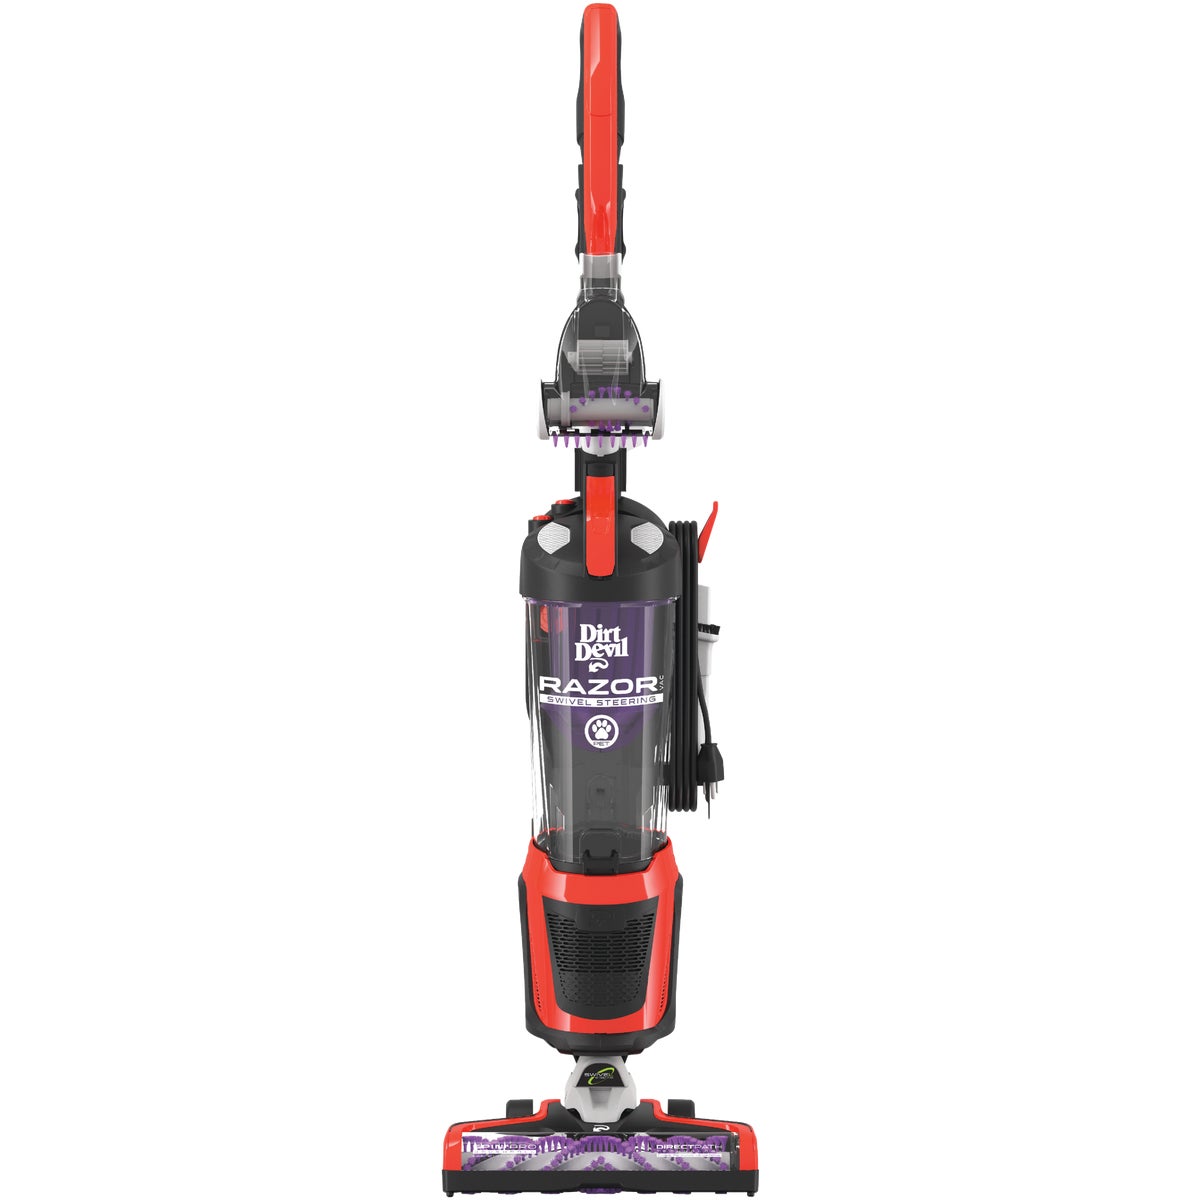 Dirt Devil Razor Pet w/Turbo Tool Upright Vacuum Cleaner